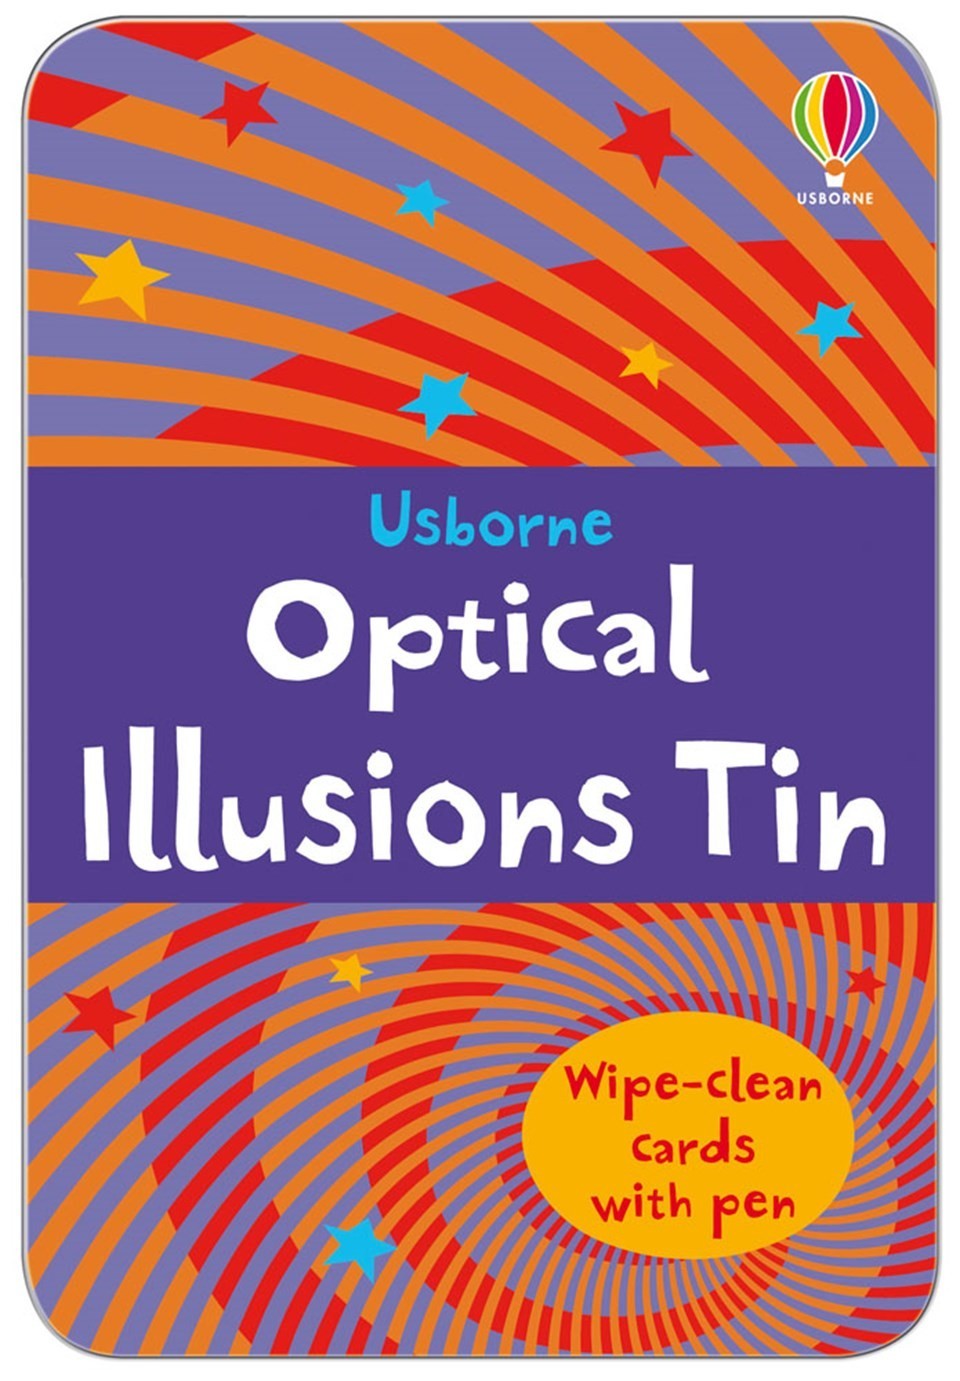 Optical illusions tin